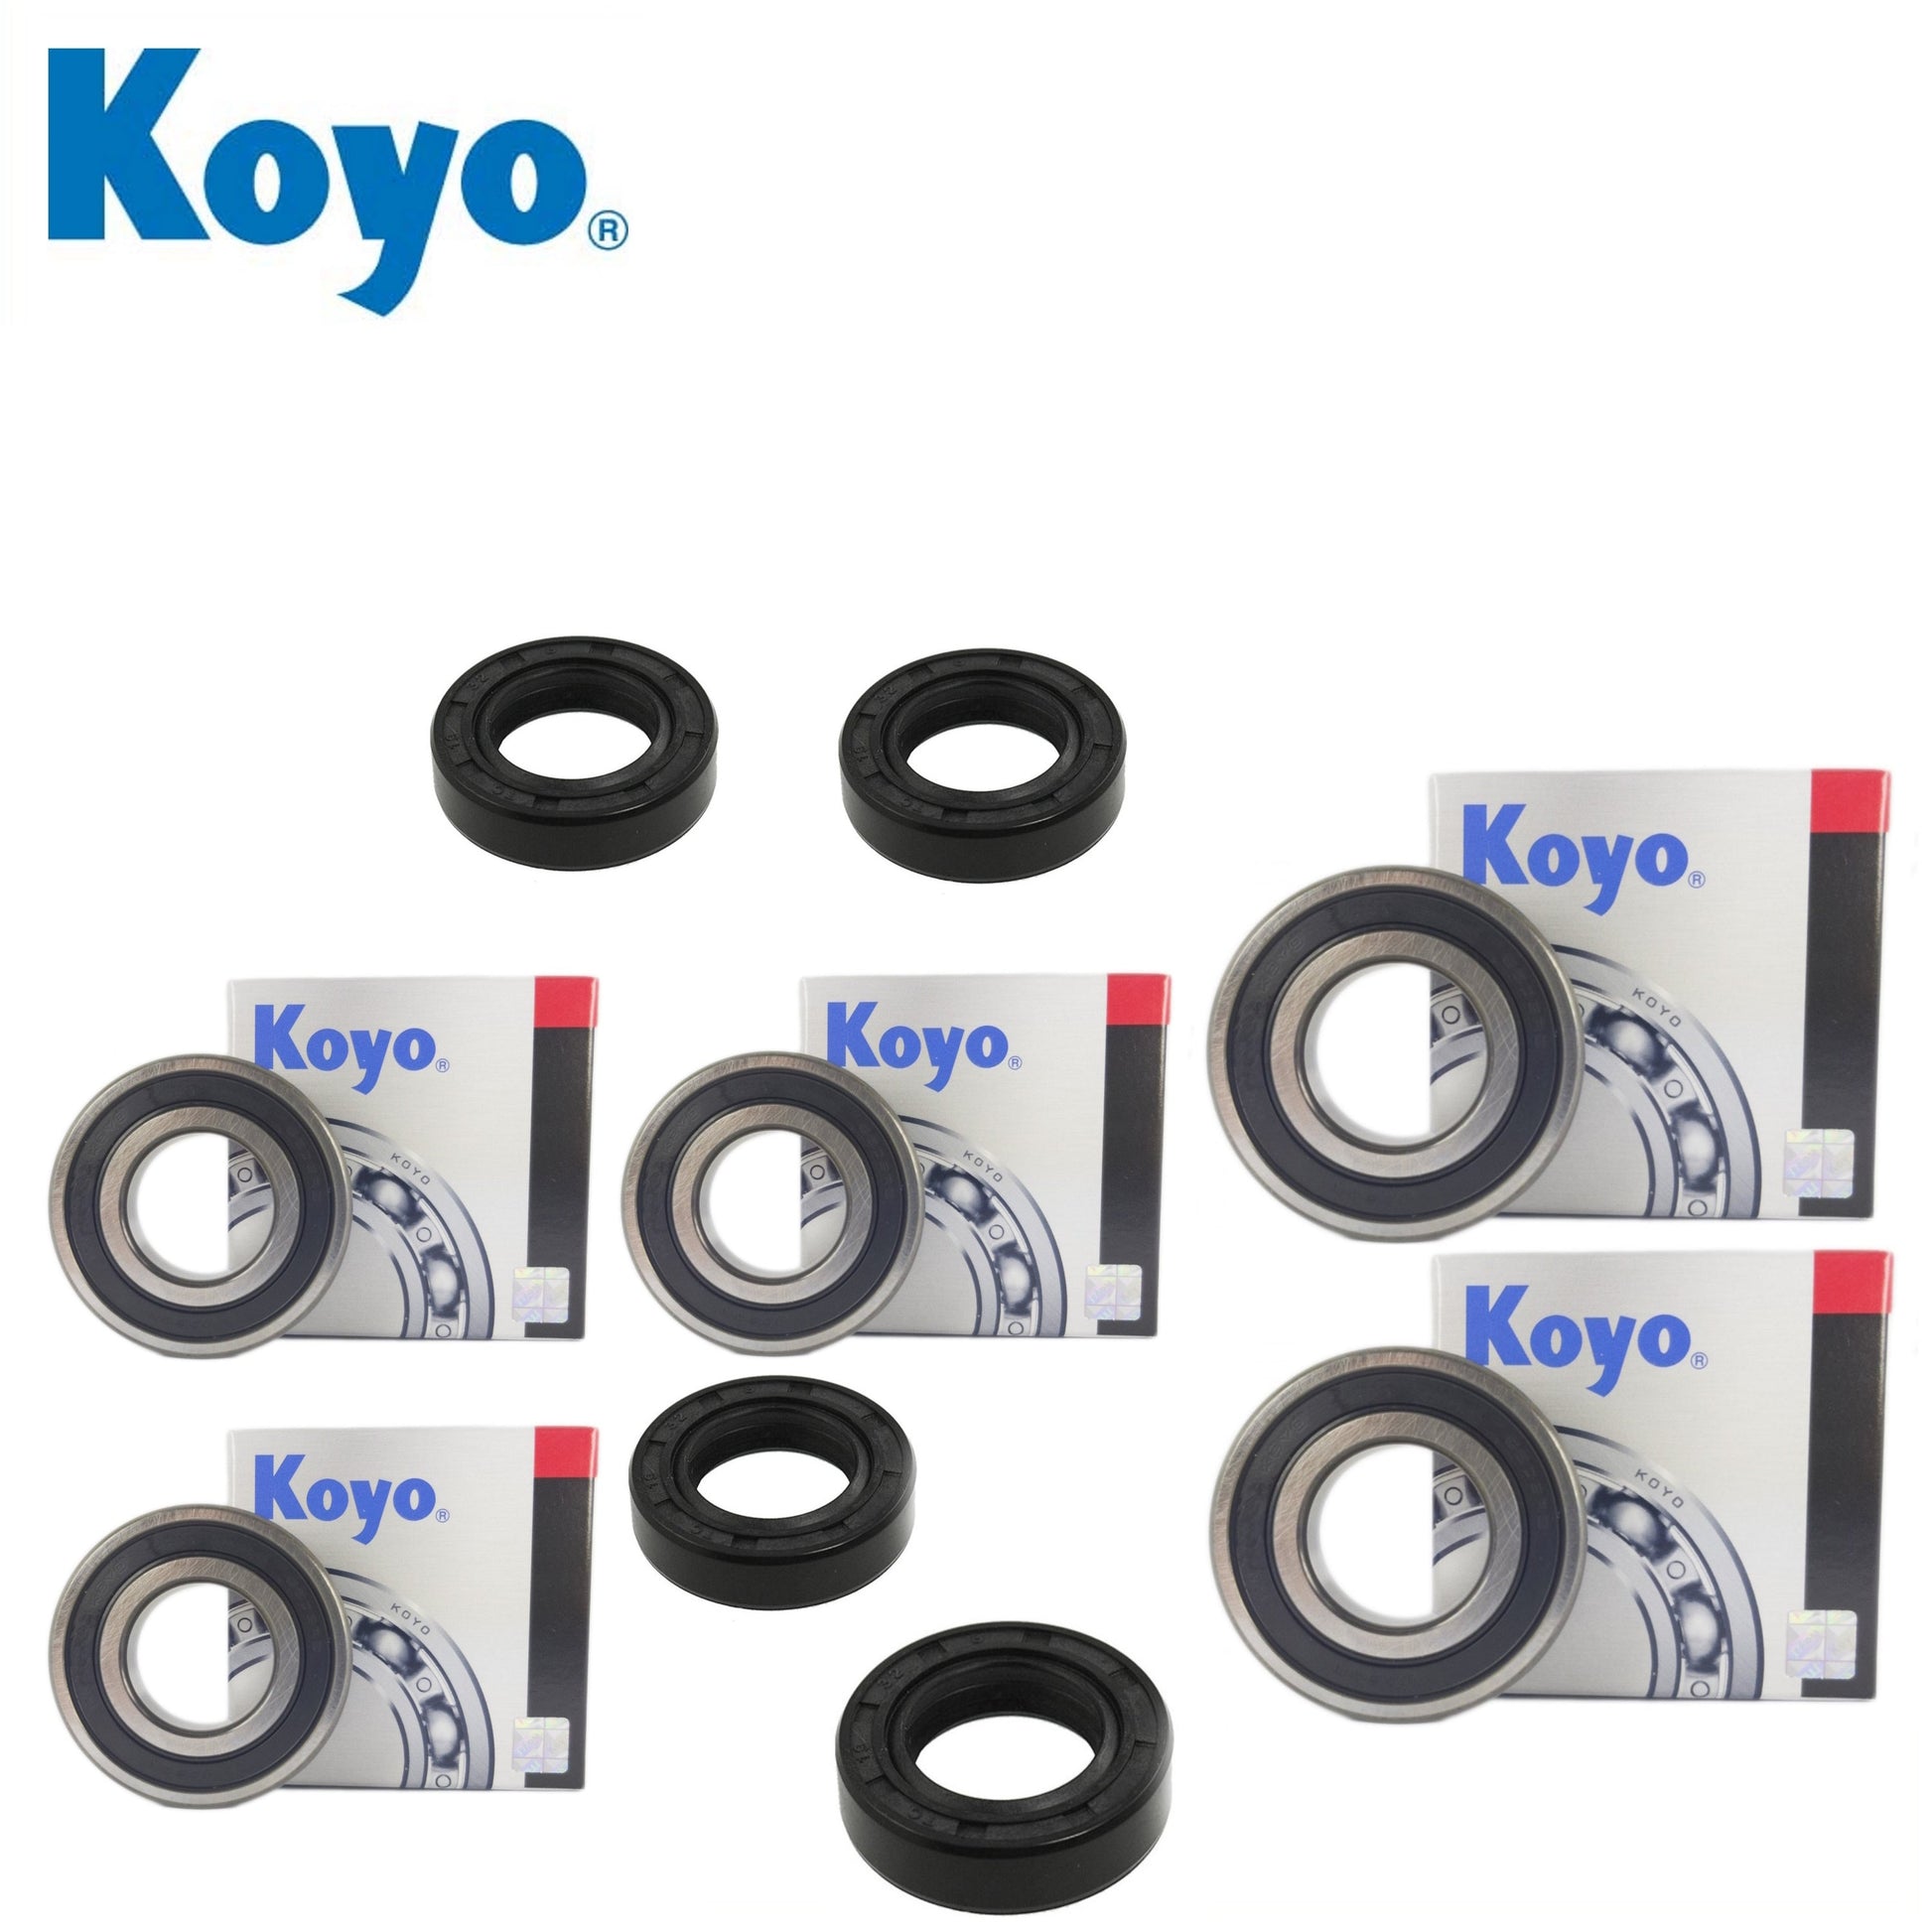 Yamaha MT07 ABS 2014 1XB8 front and rear wheel bearing kit with Koyo bearings